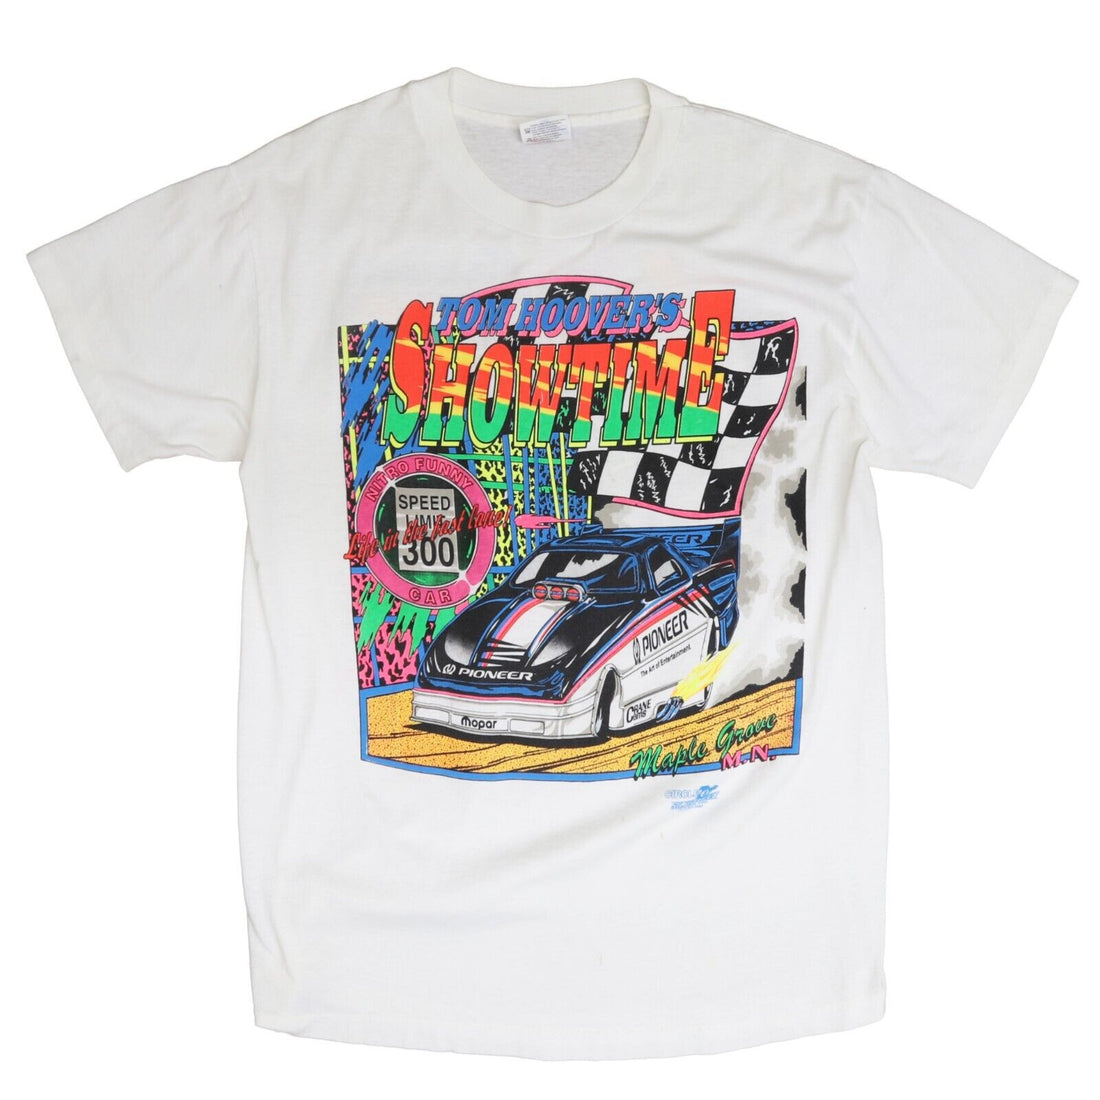 Vintage Tom Hoover's Showtime Drag Racing T-Shirt Size Large 90s